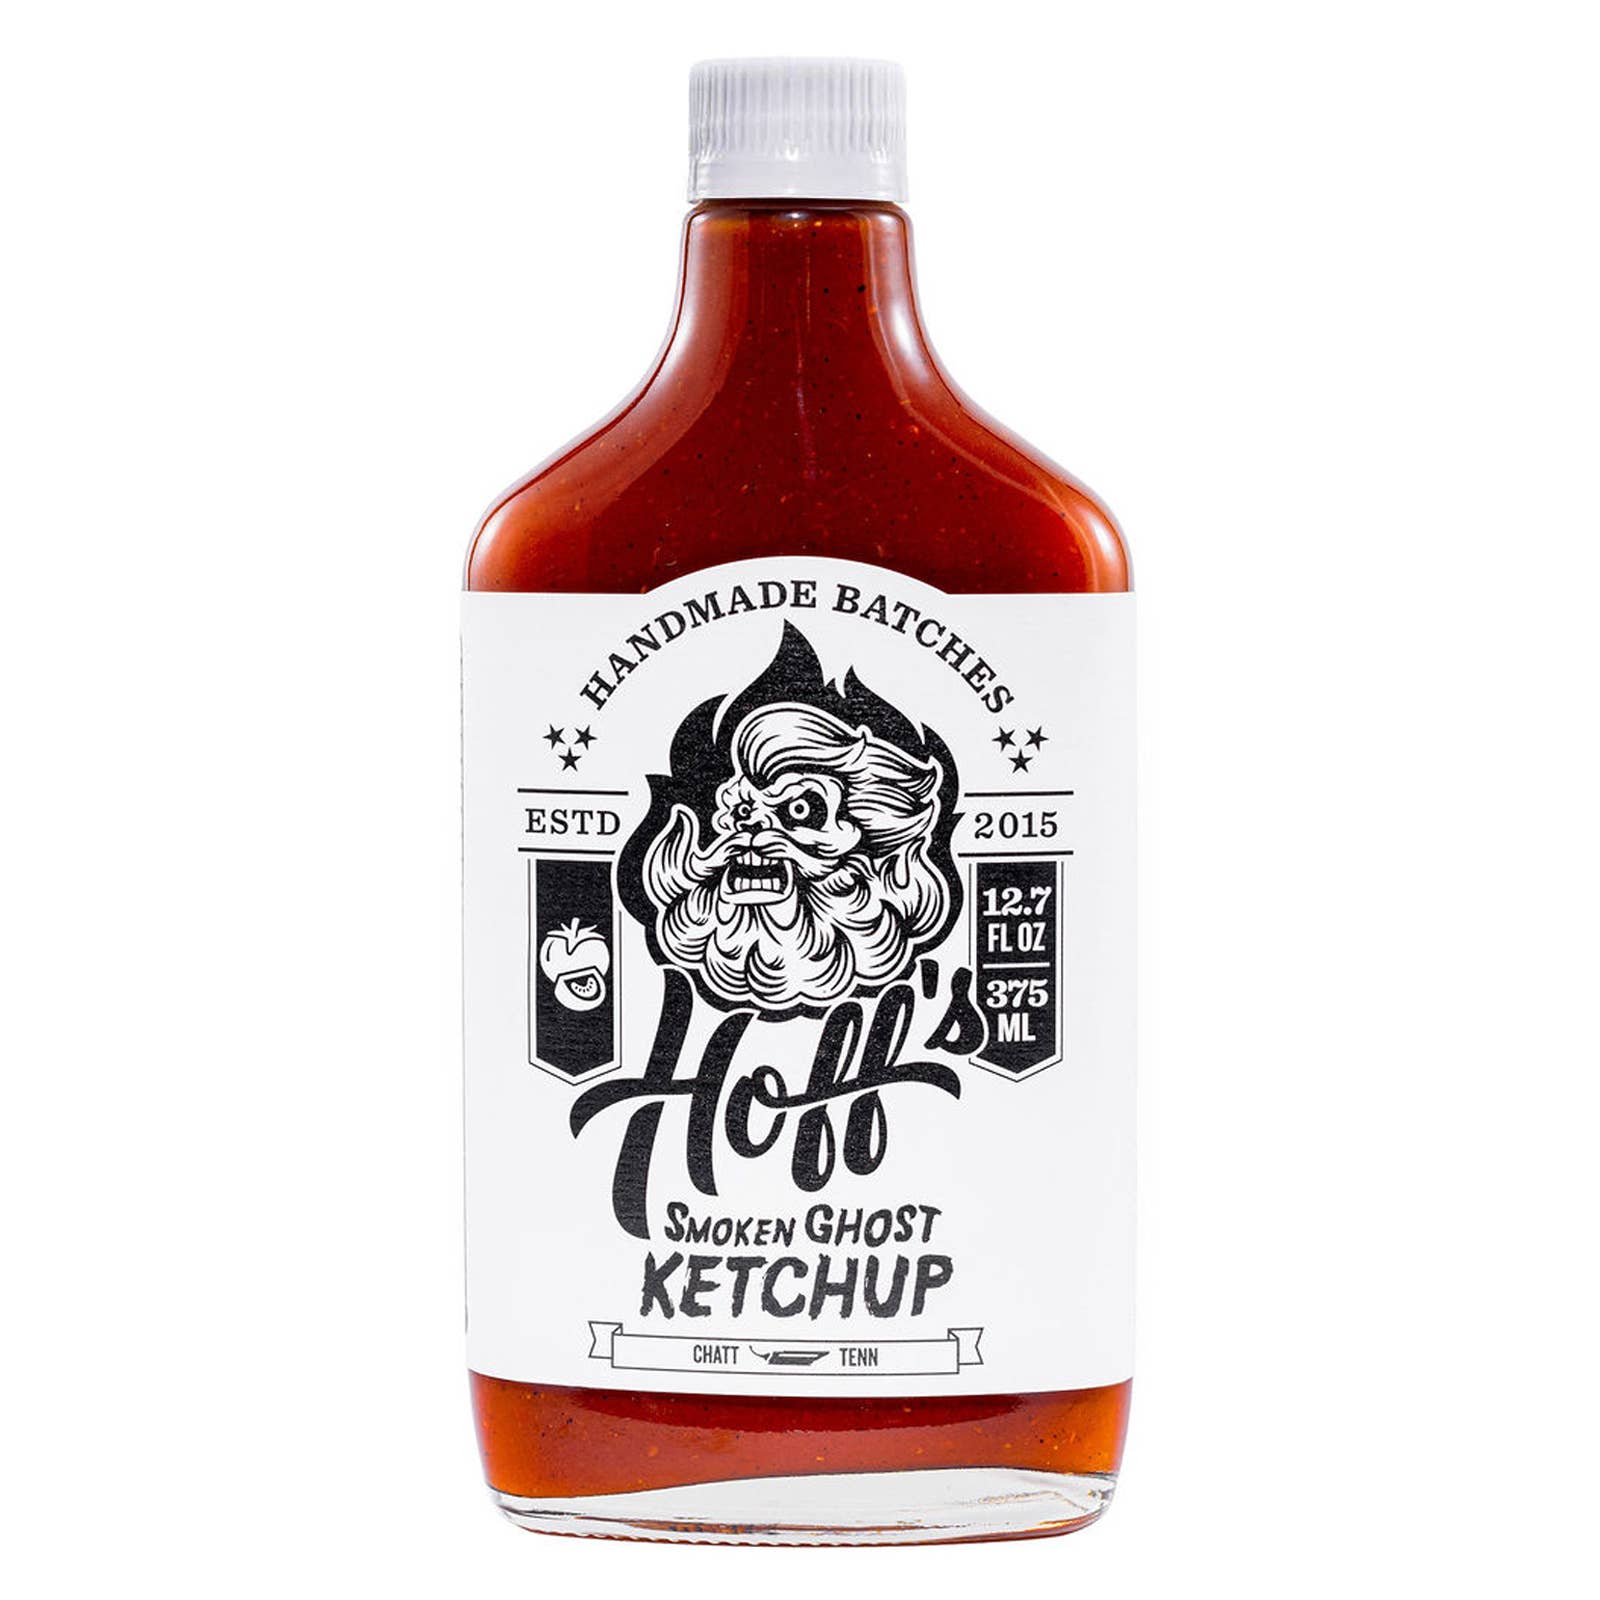 Smoken Ghost Ketchup - Hoff's Spicy Ketchup - 12.7oz